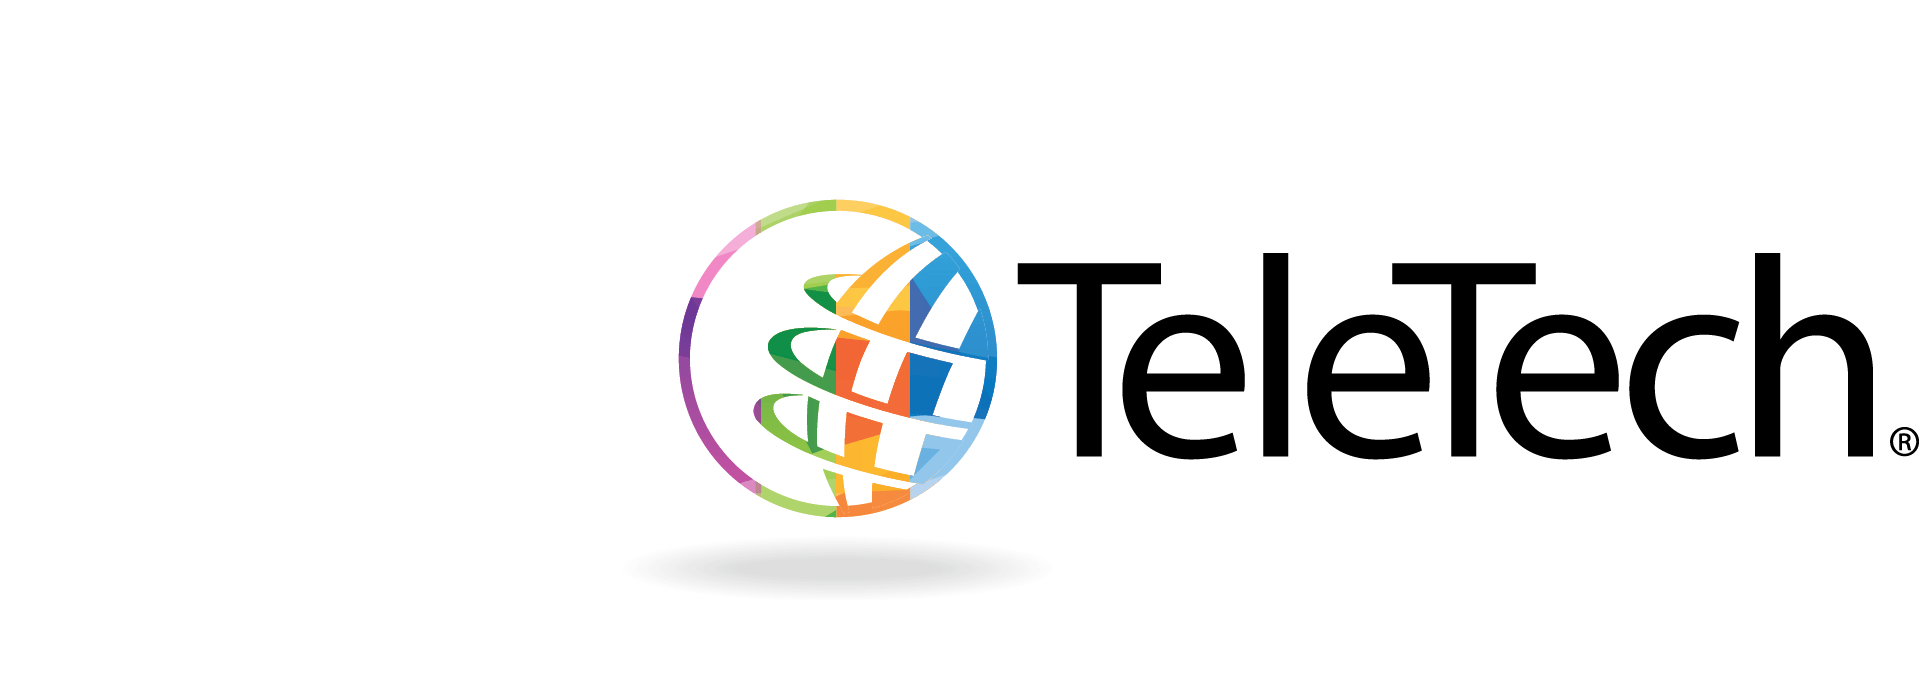 TeleTech Logo - TeleTech Employer Profile | PinoyJobs.ph